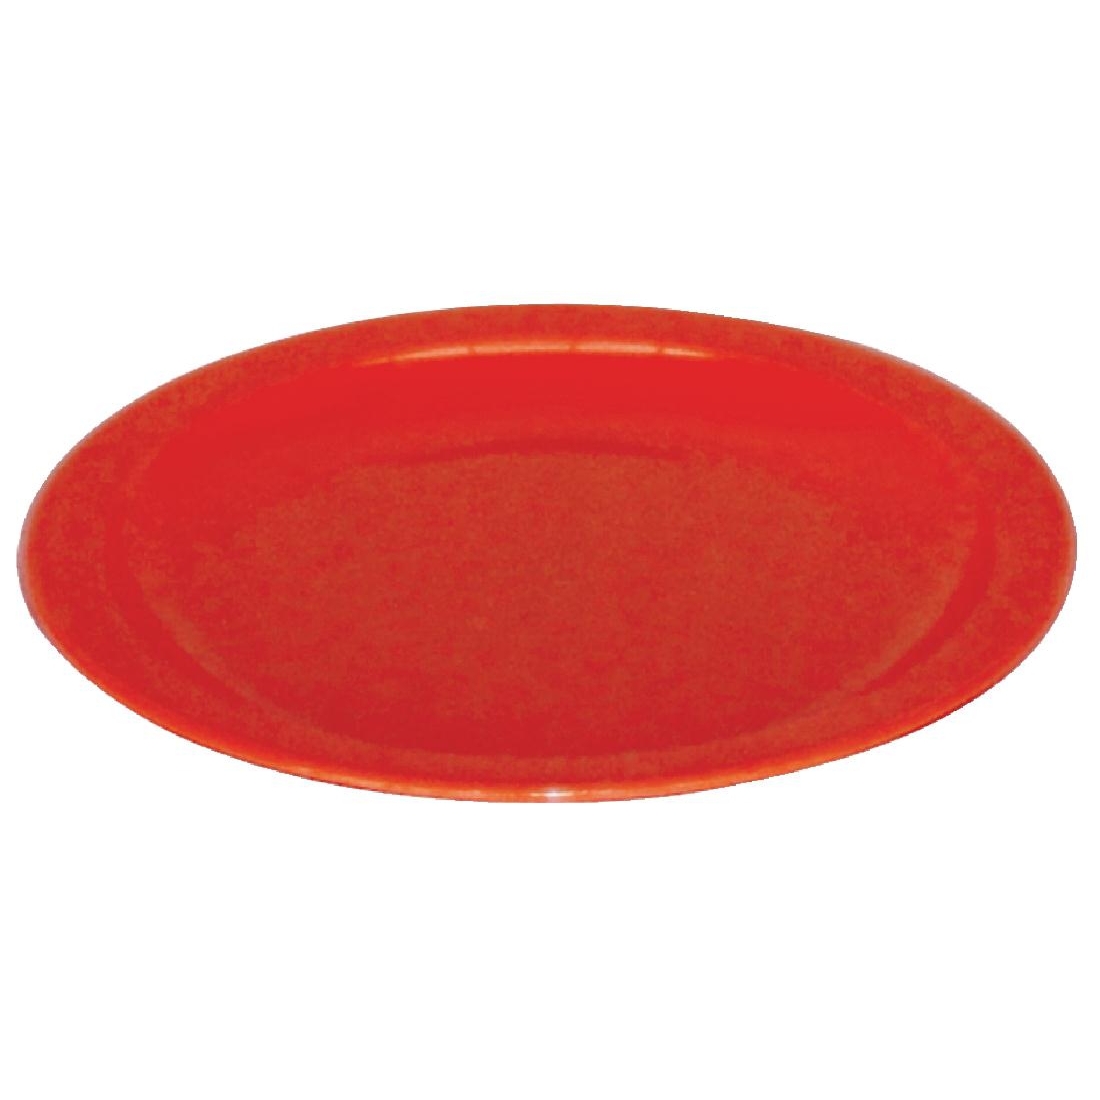 Kristallon Polycarbonate Plates Red 230mm